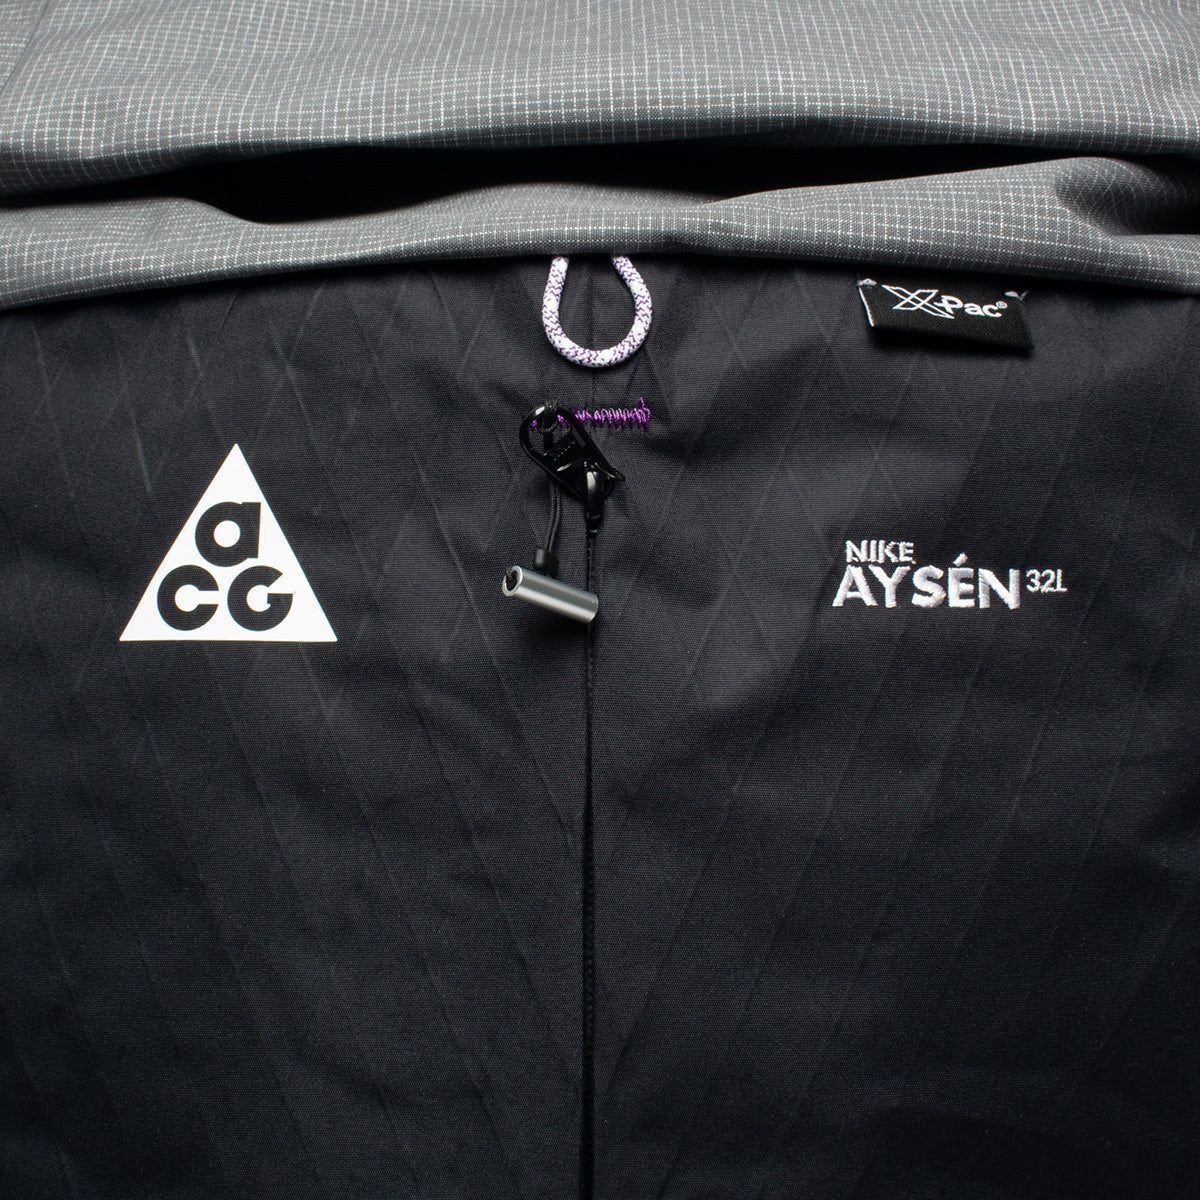 Nike | ACG Aysen Backpack (32L) Style # DV4054-010 Color : Black / Cool Grey